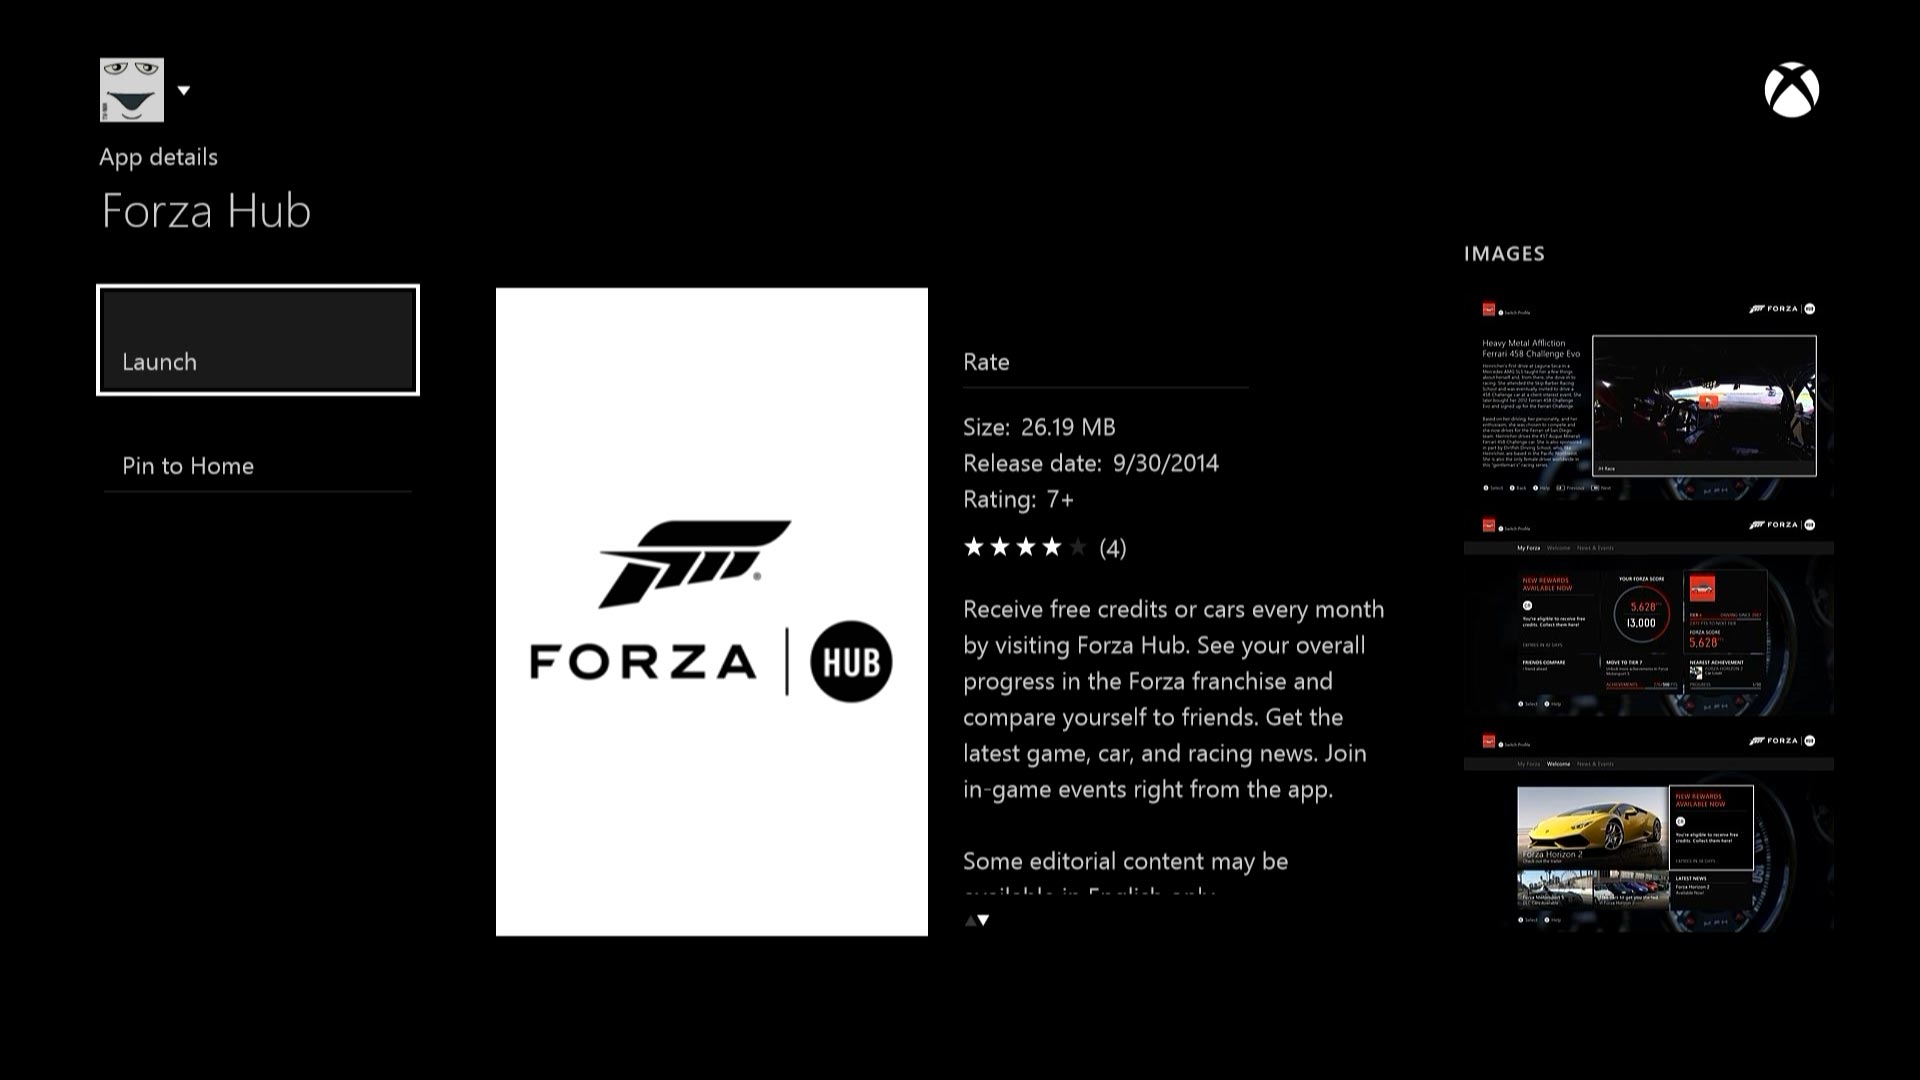 Forza Hub App Description